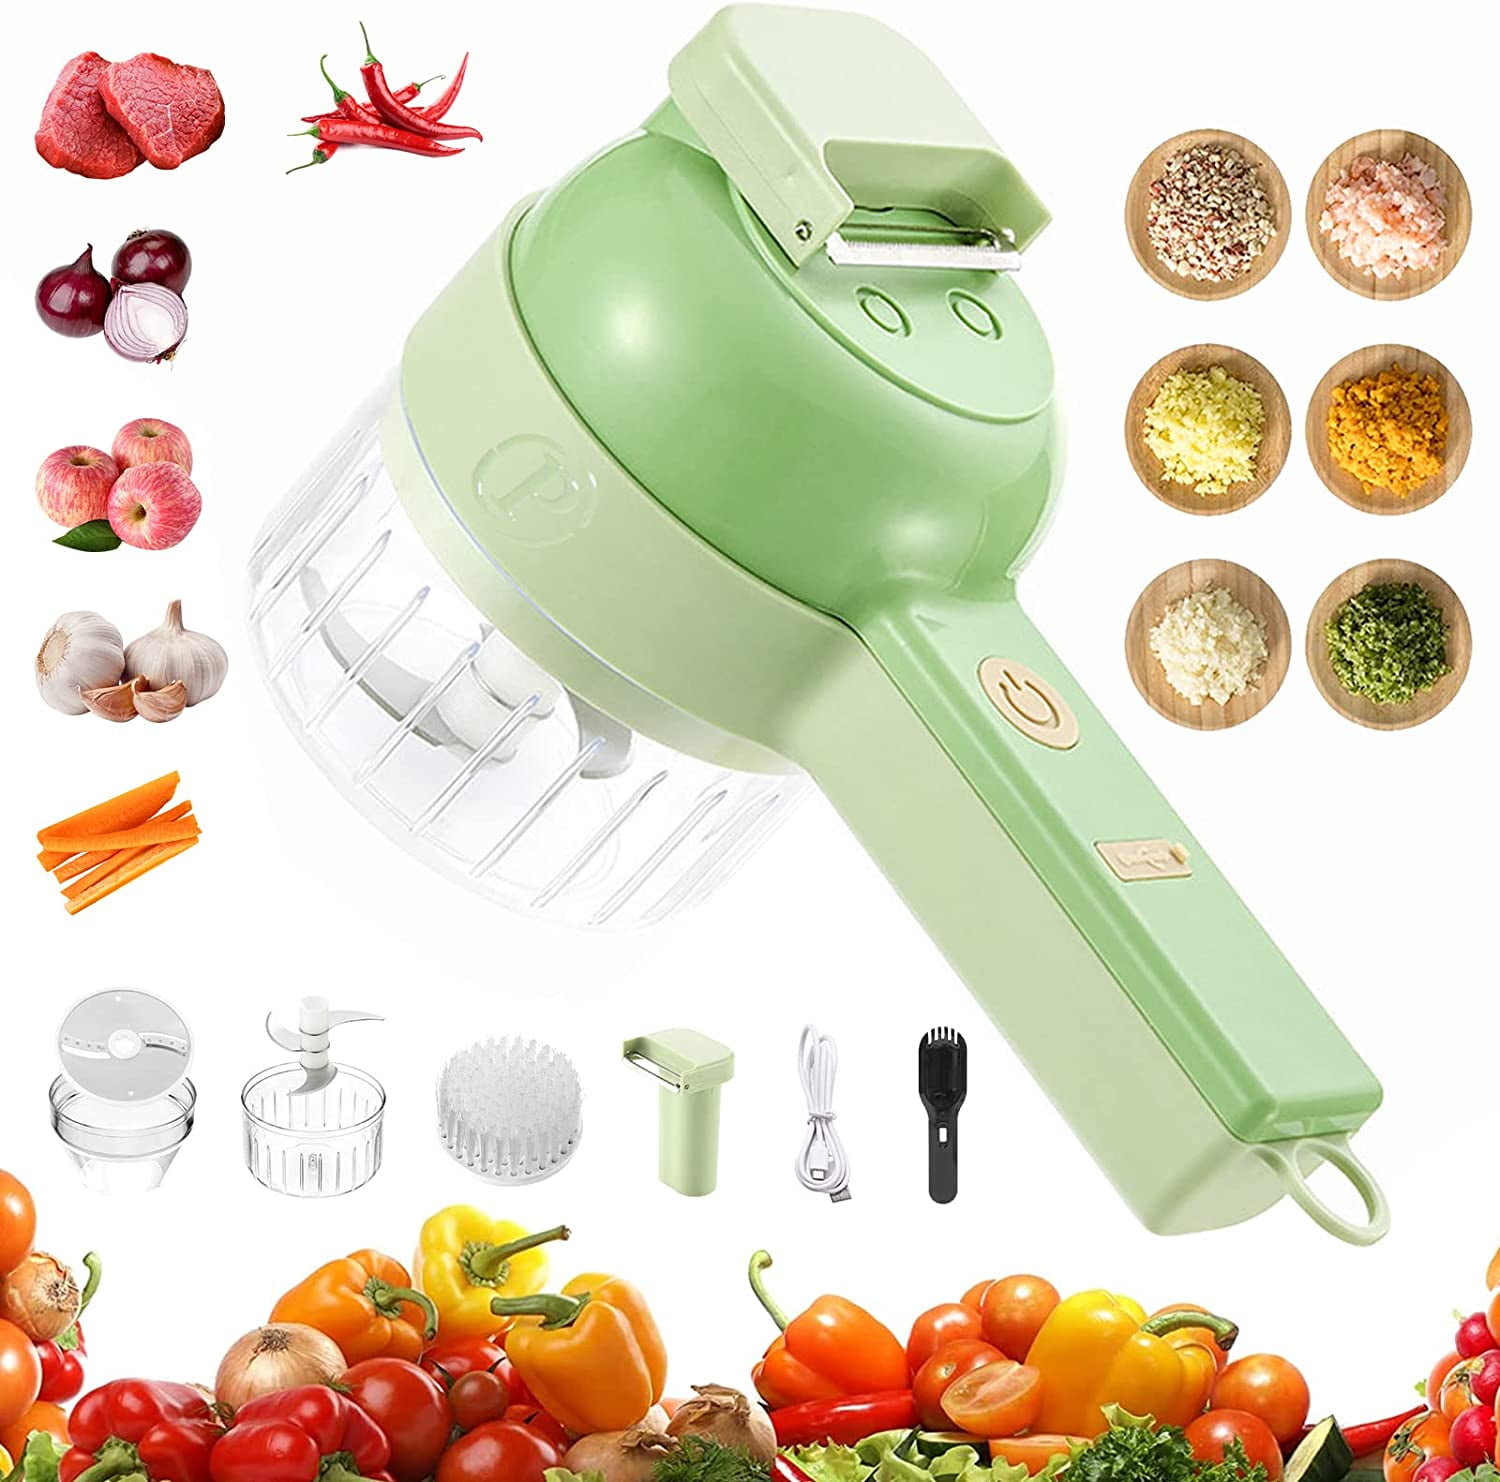 Multifunctional 4 in 1 Handheld Electric Vegetable Cutter Set, Portable Wireless Food Chopper | Kitchen Vegetable Slicer Dicer Cutter for Garlic